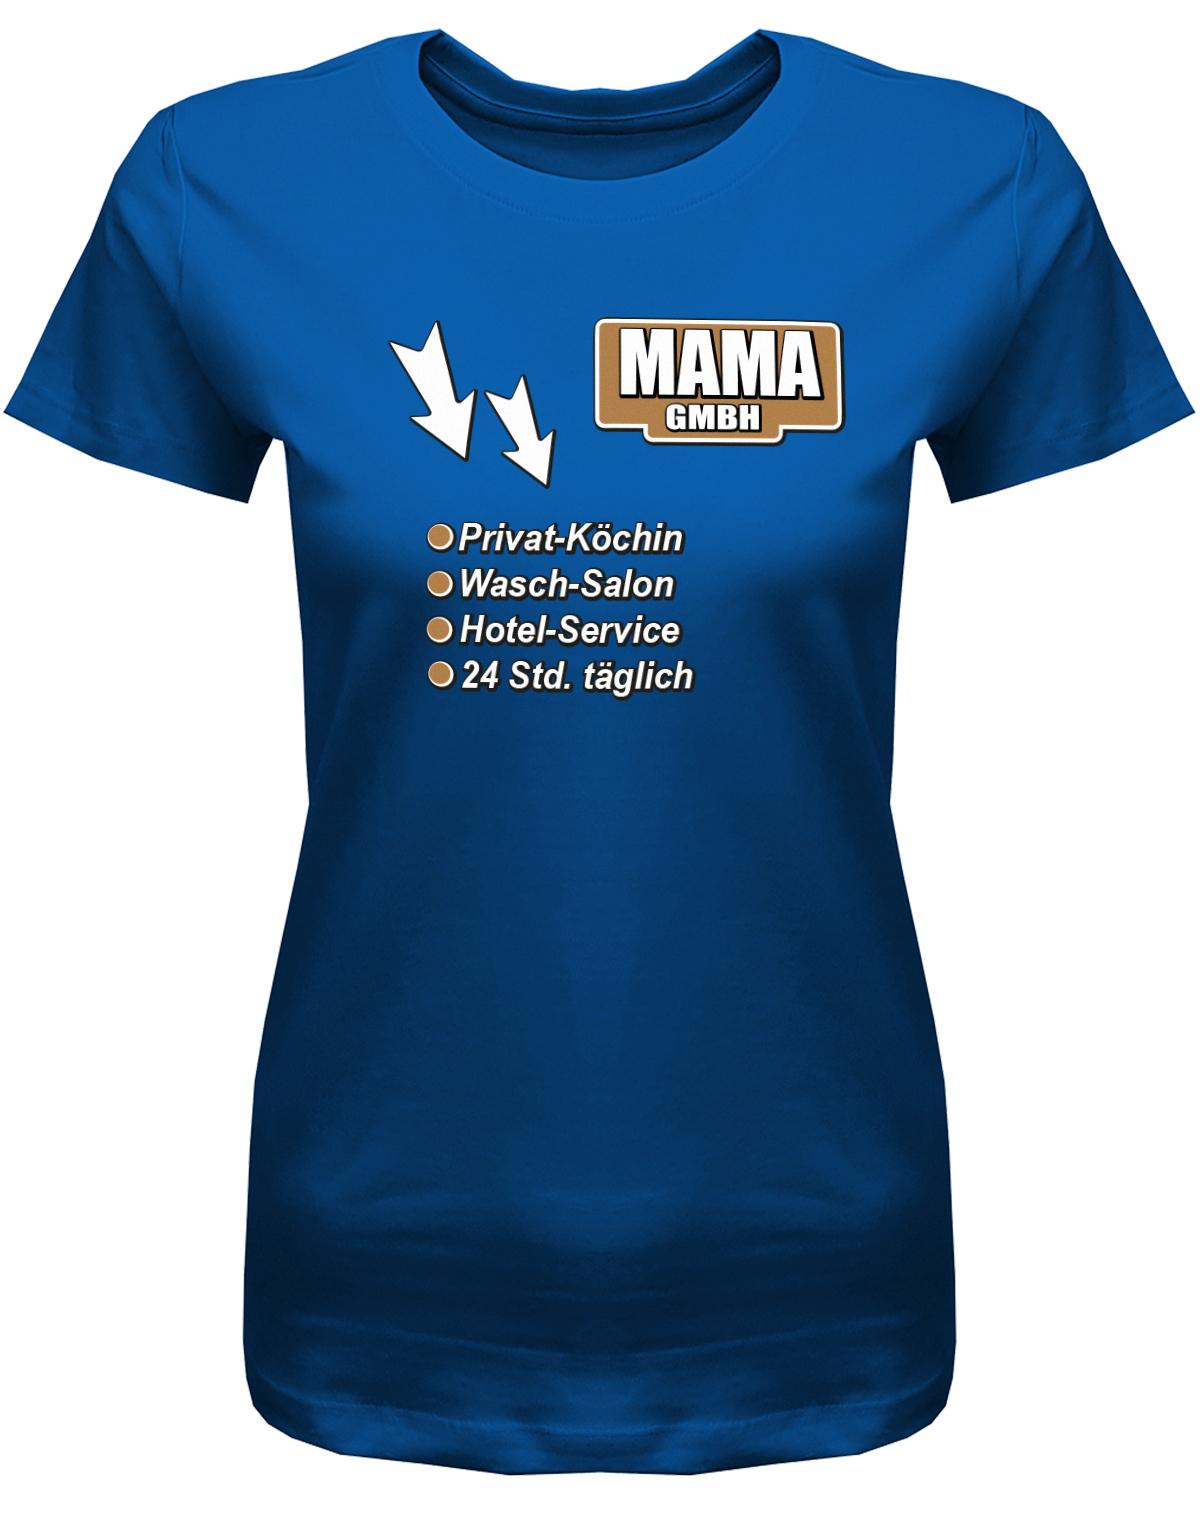 Mama-GmbH-Damen-Shirt-Royalblau